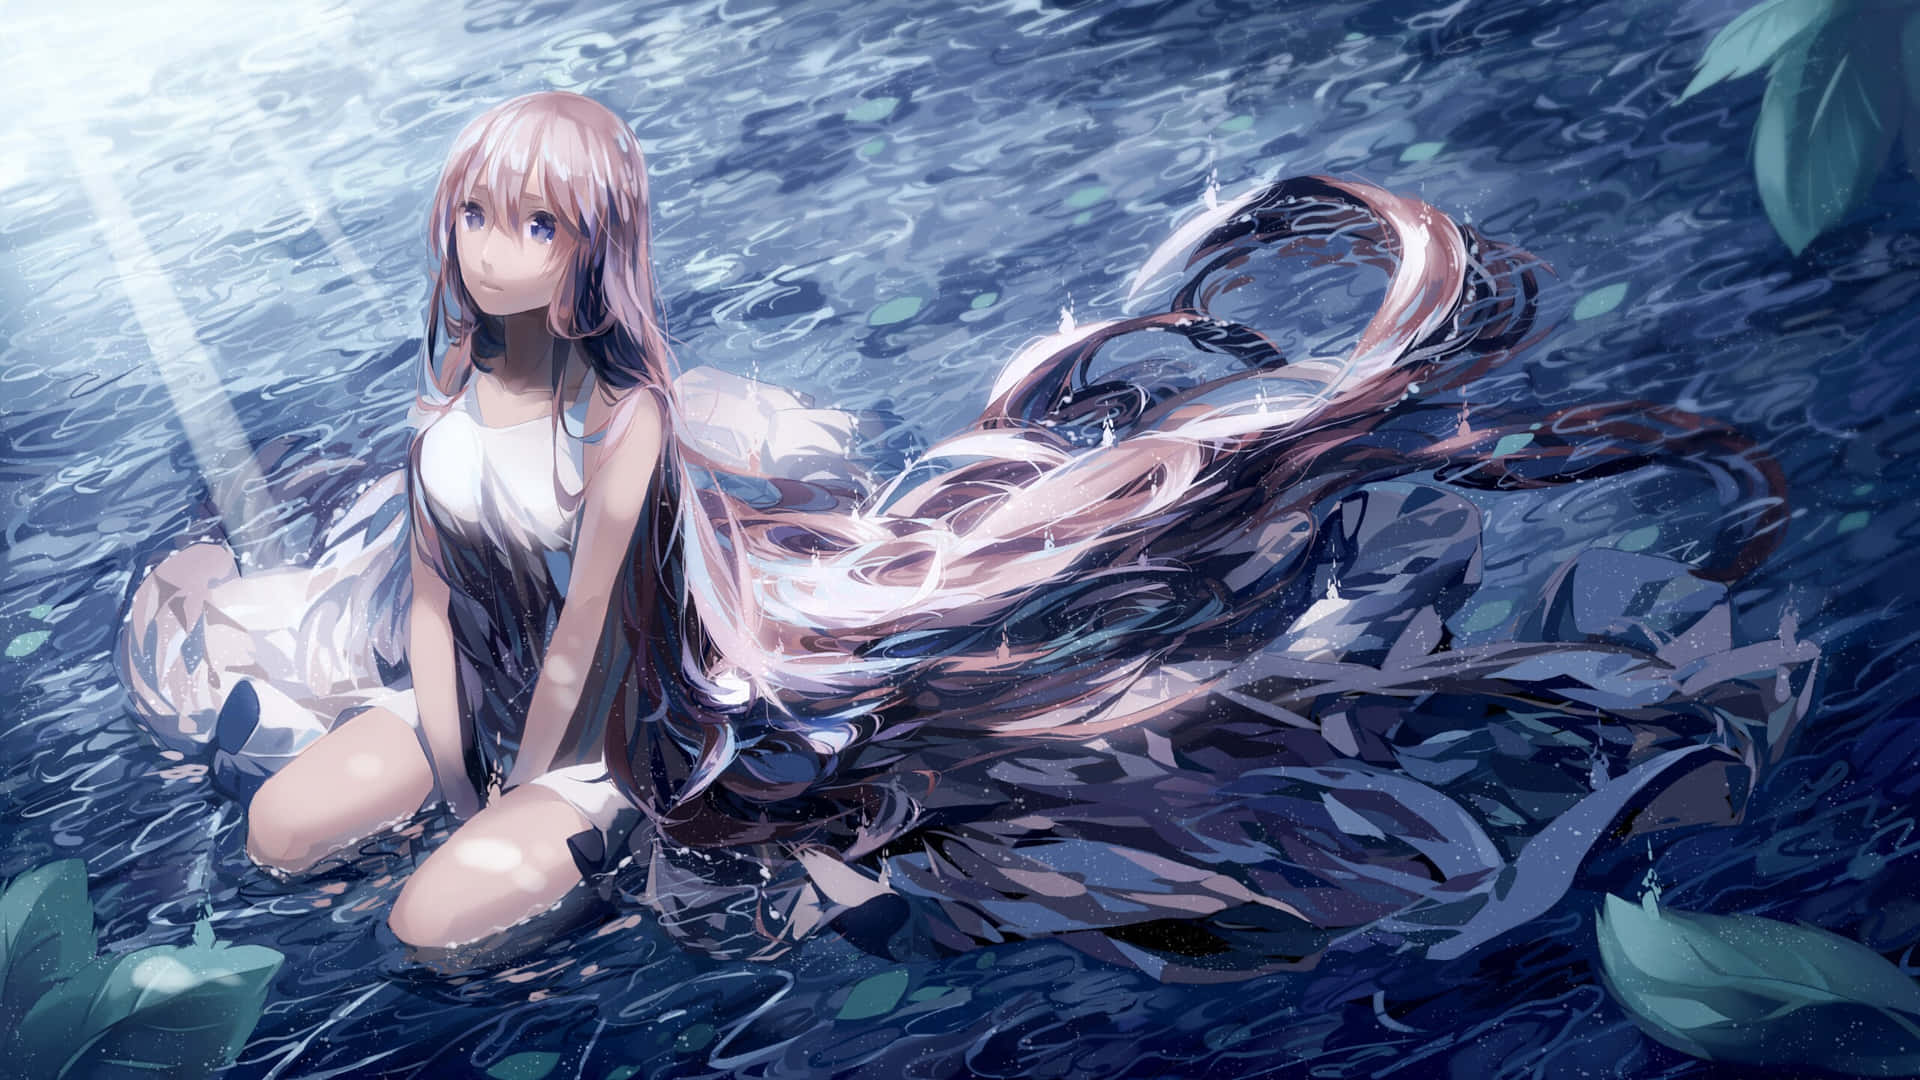 Serene Water Nymph Anime Art2560x1440 Wallpaper